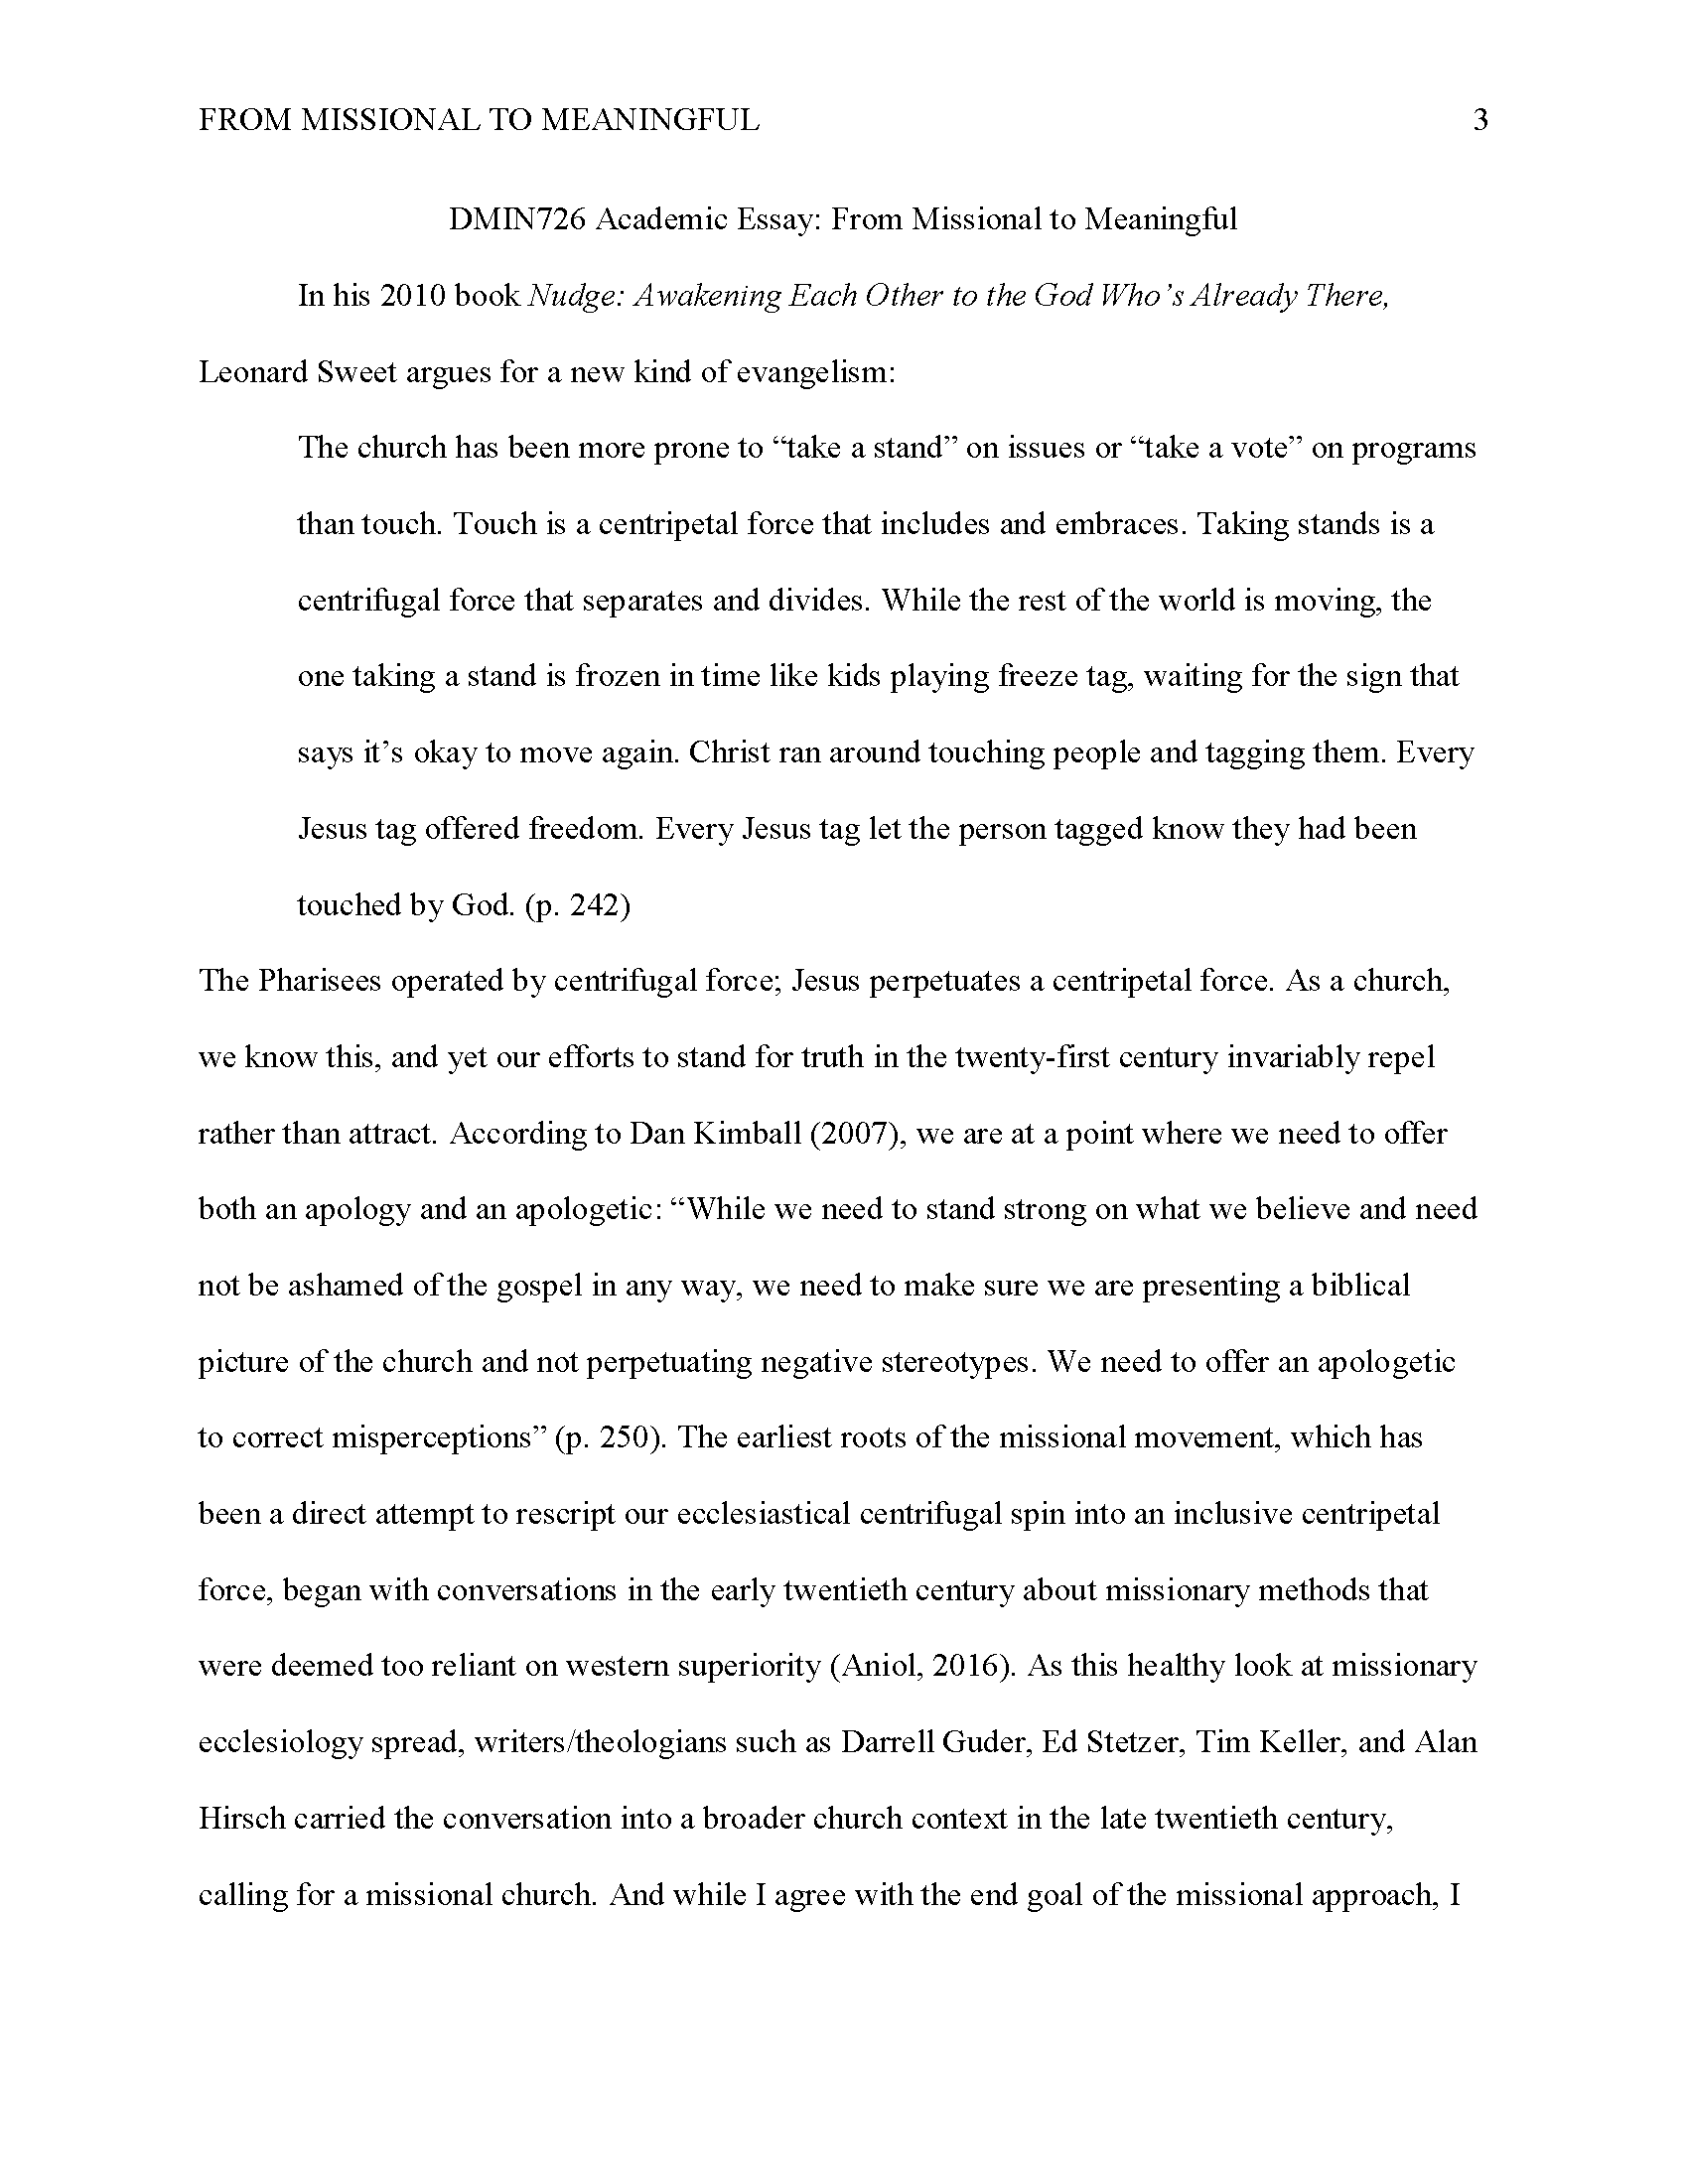 APA Essay Page 3